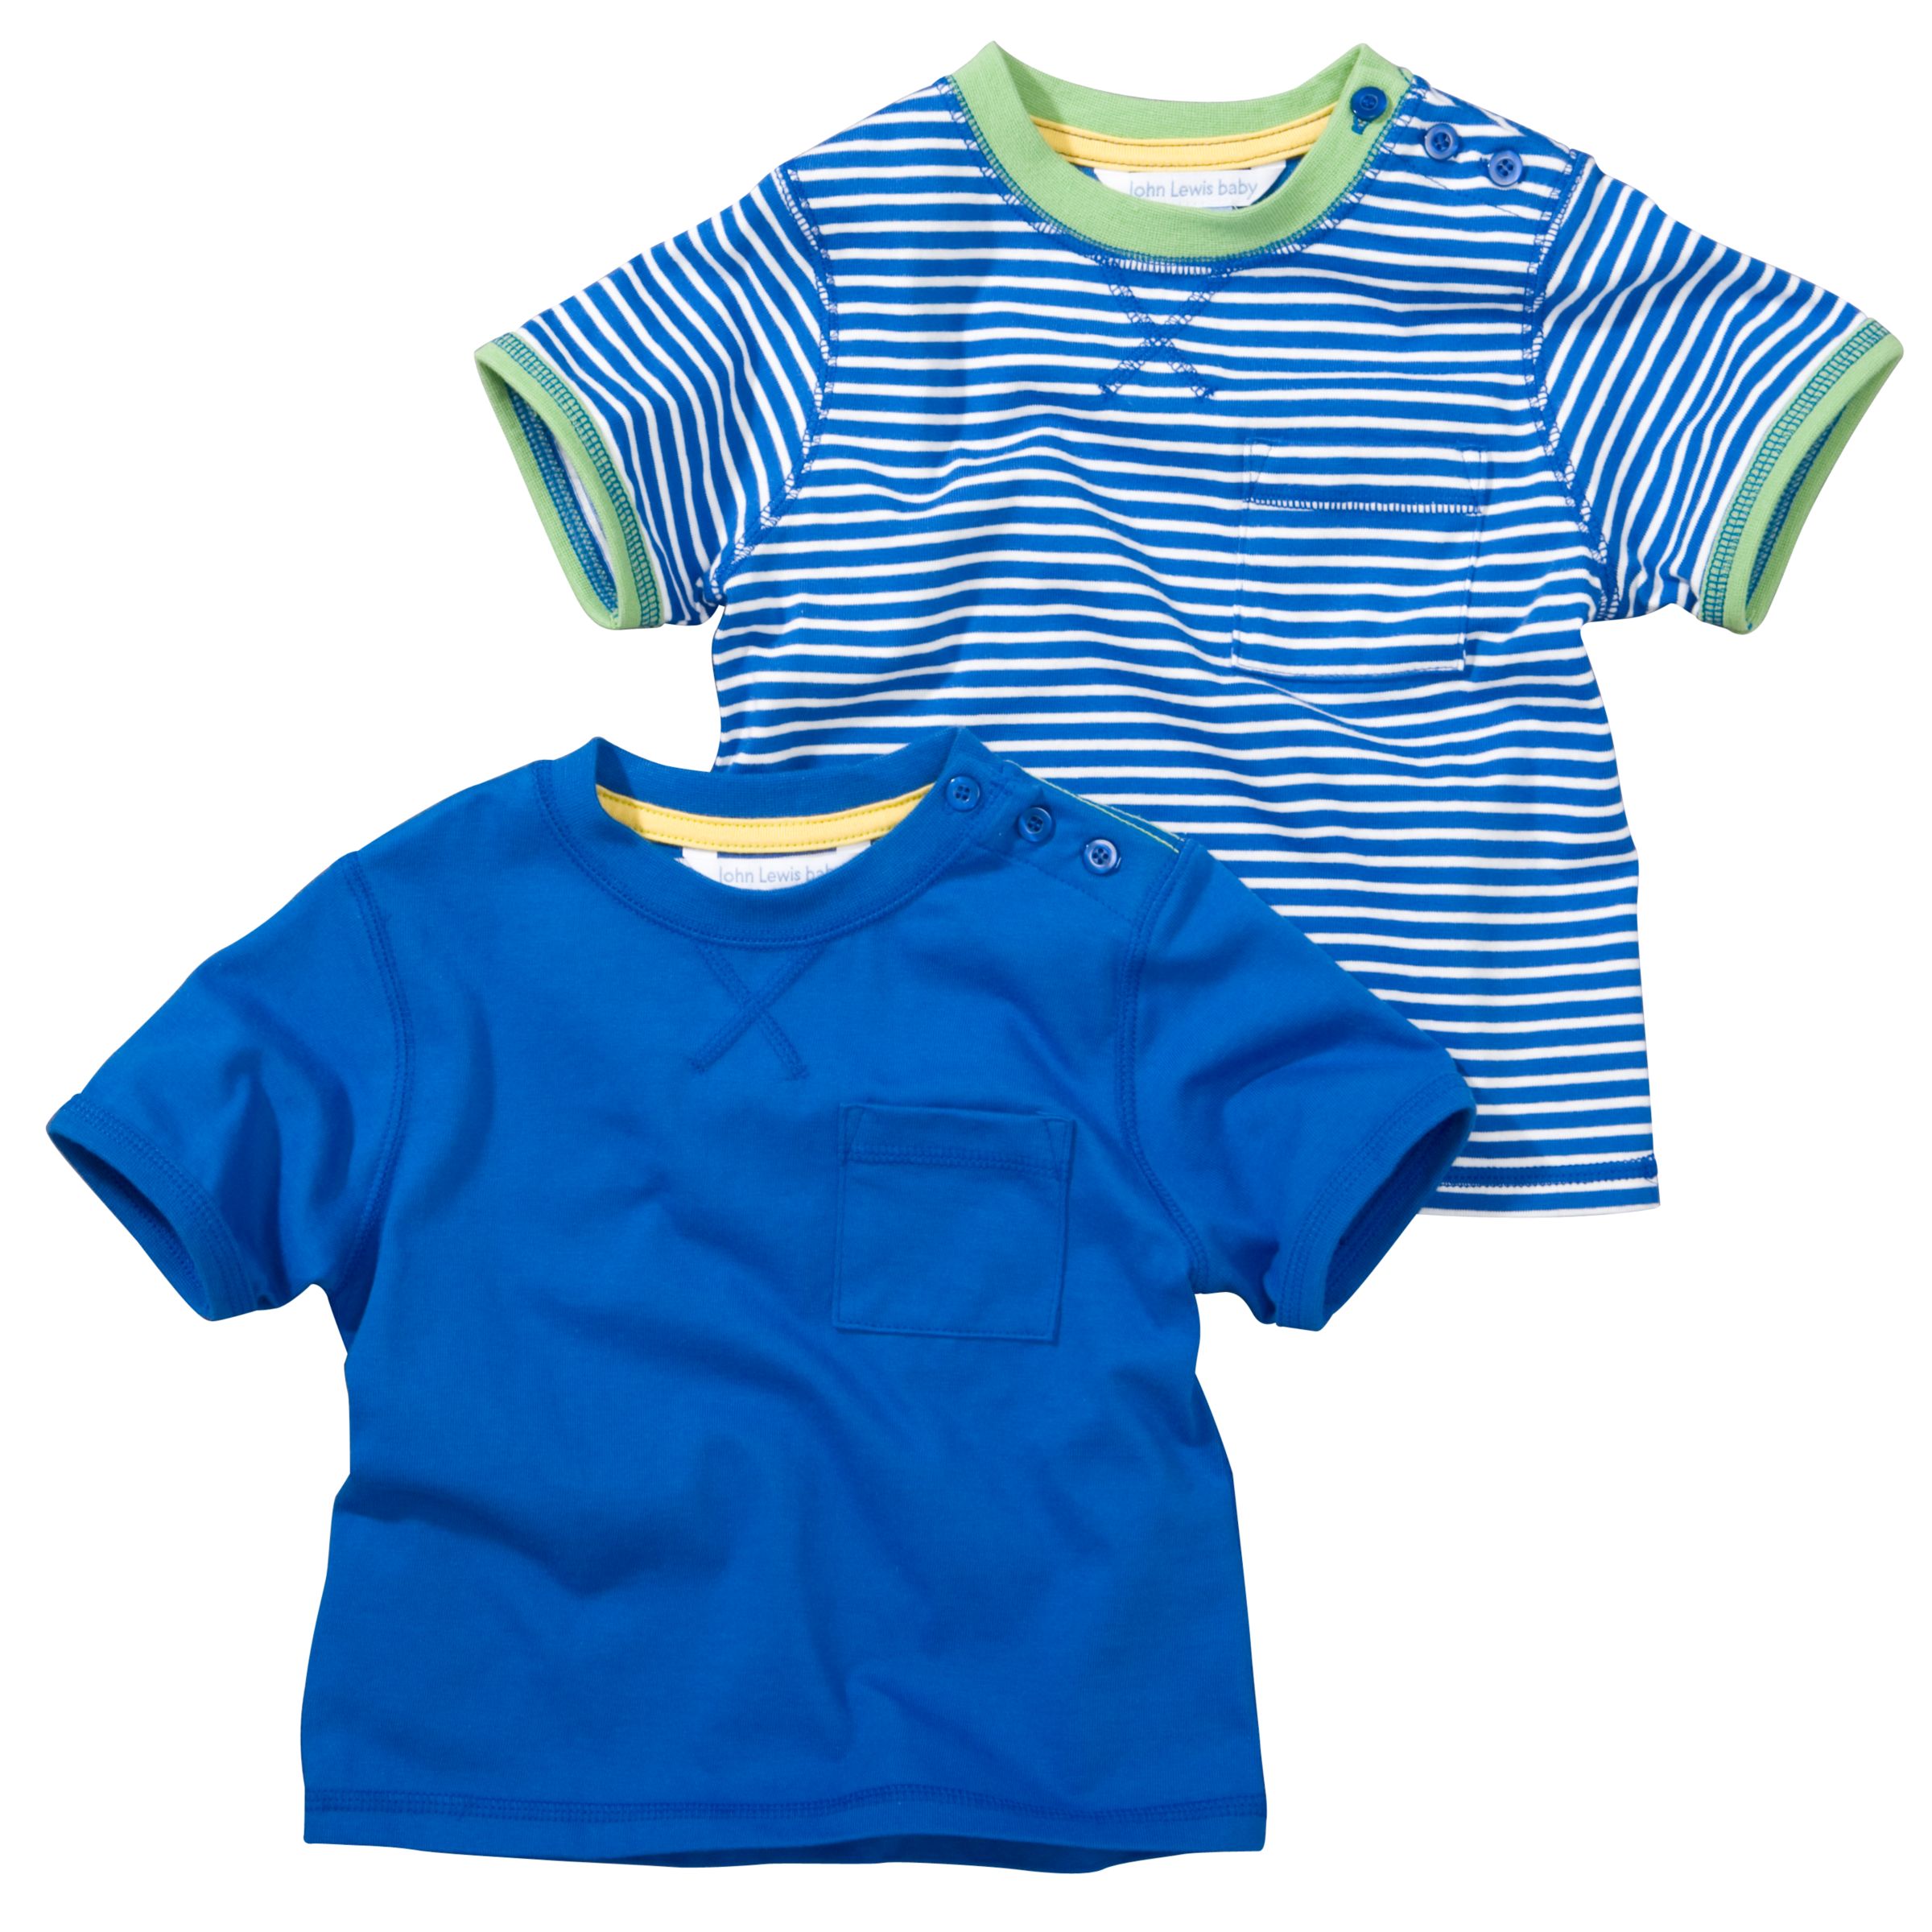 John Lewis Boy Stripe and Plain T-Shirt 2 Pack,